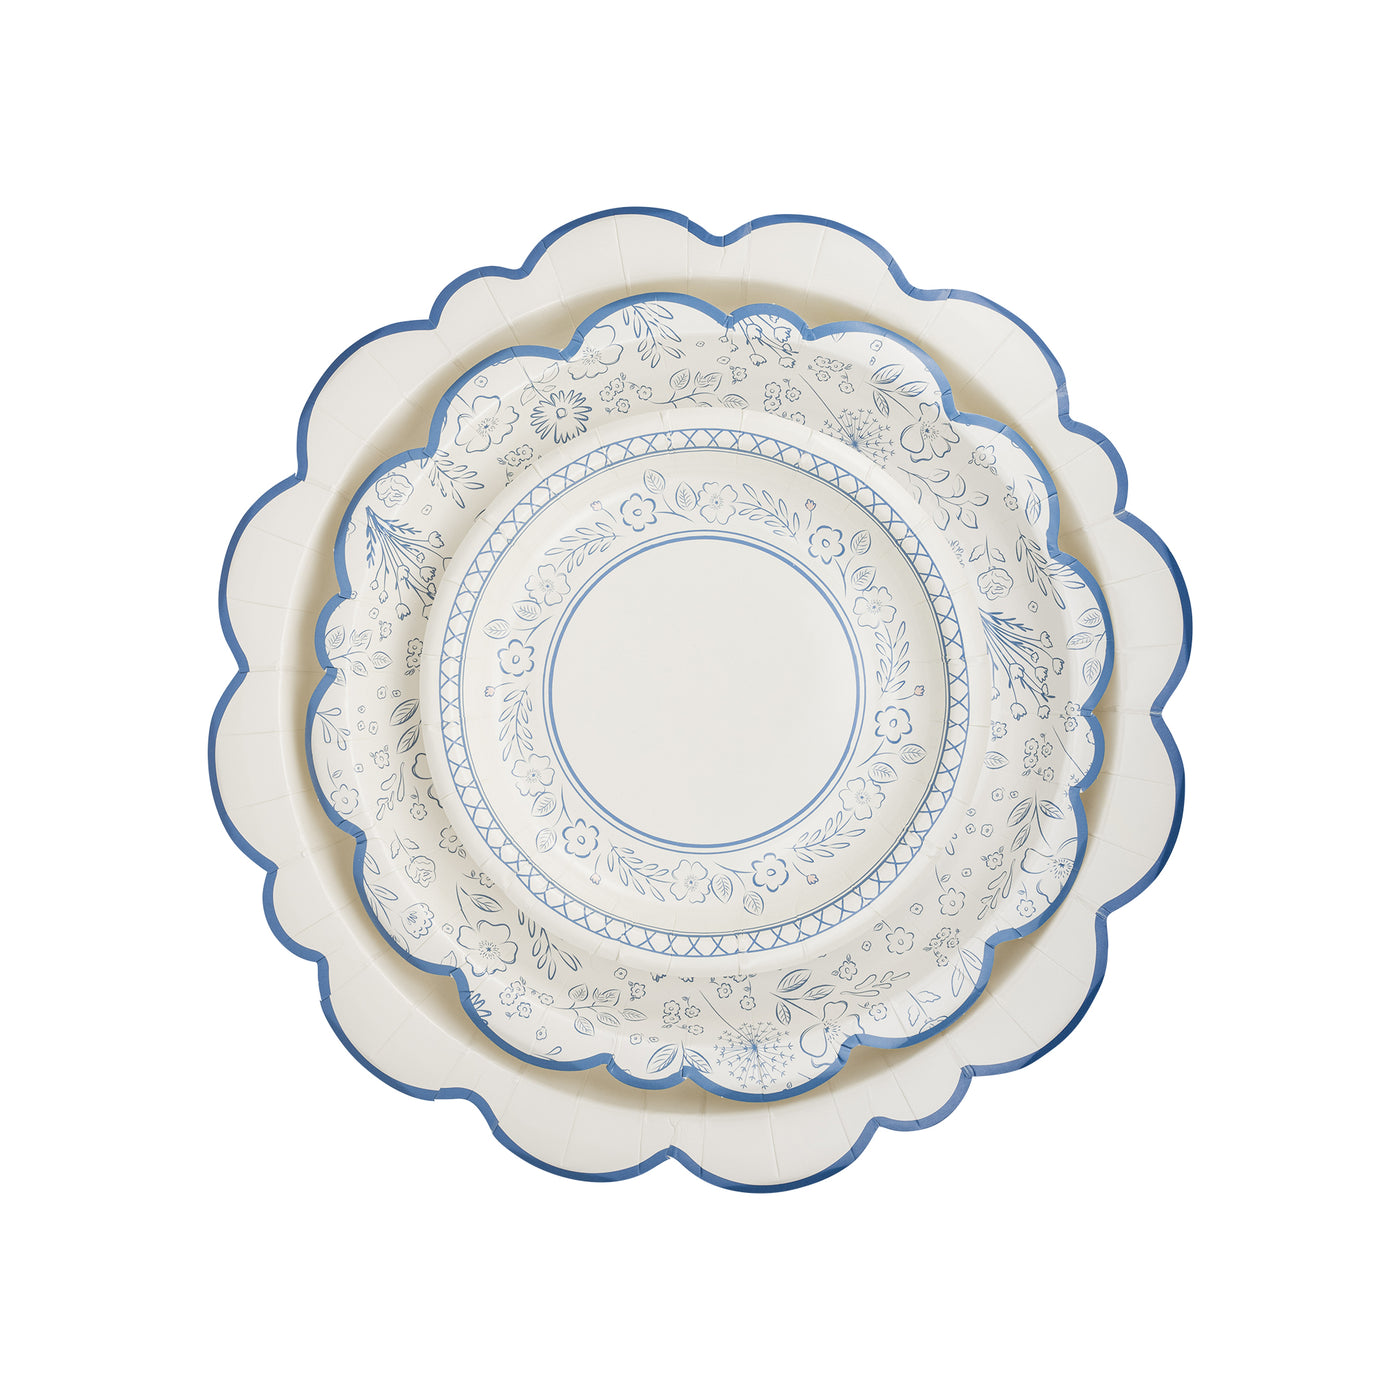 PEM1042 - Pembroke Cream with Blue Edge 12" Paper Plate